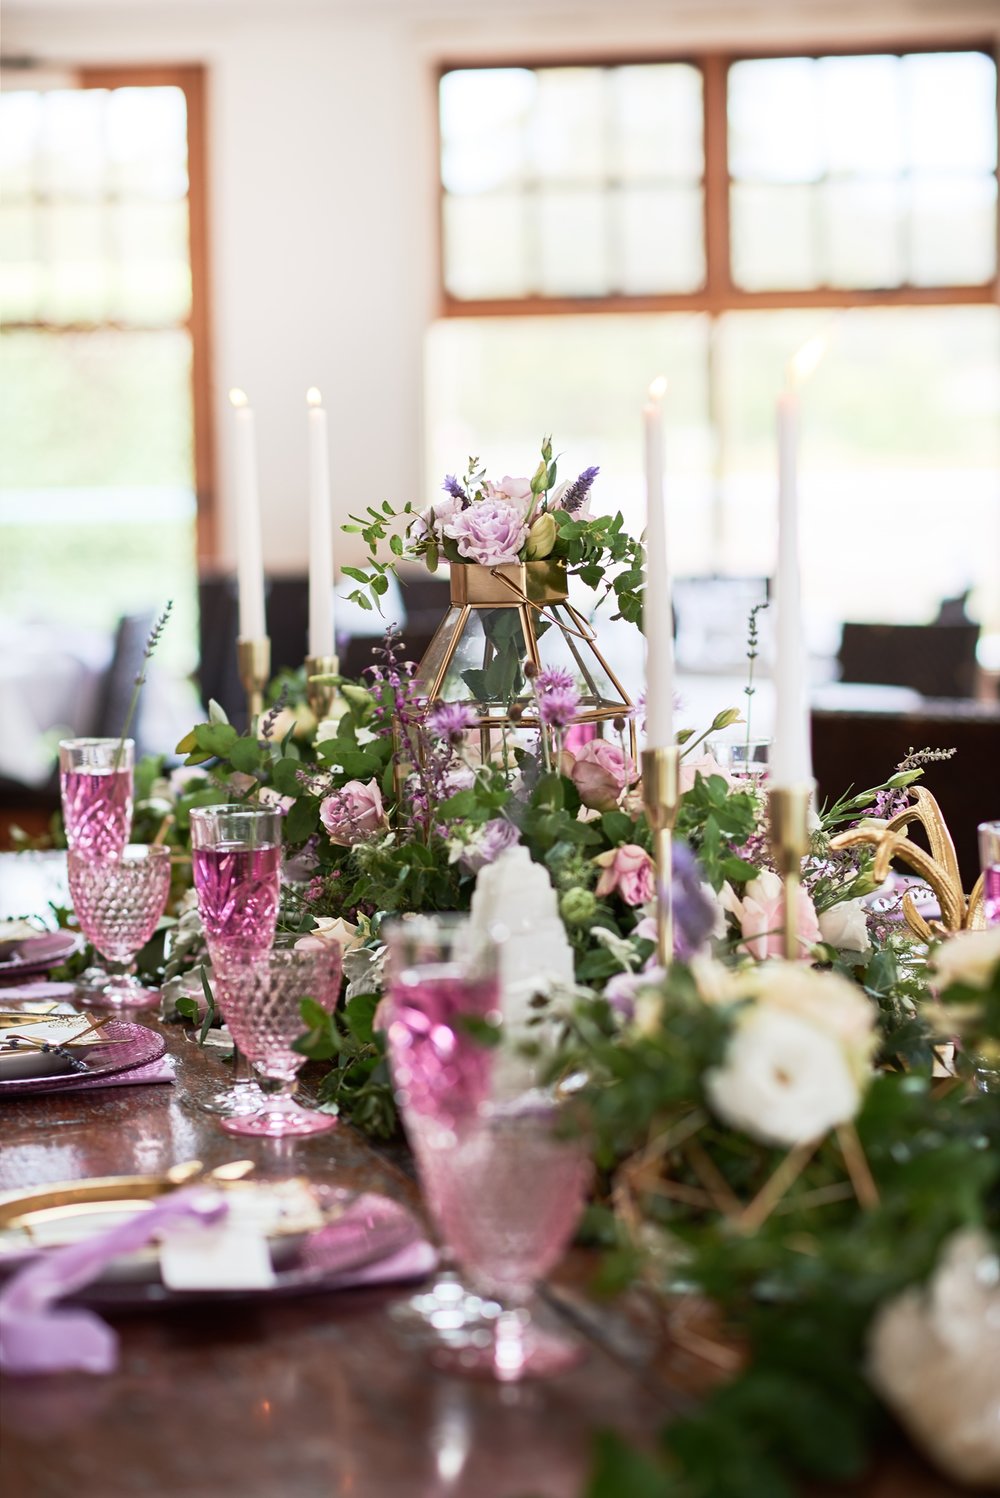 Victoria-Australia-luxury-wedding-inspiration-Sault - Inside table00117.jpg